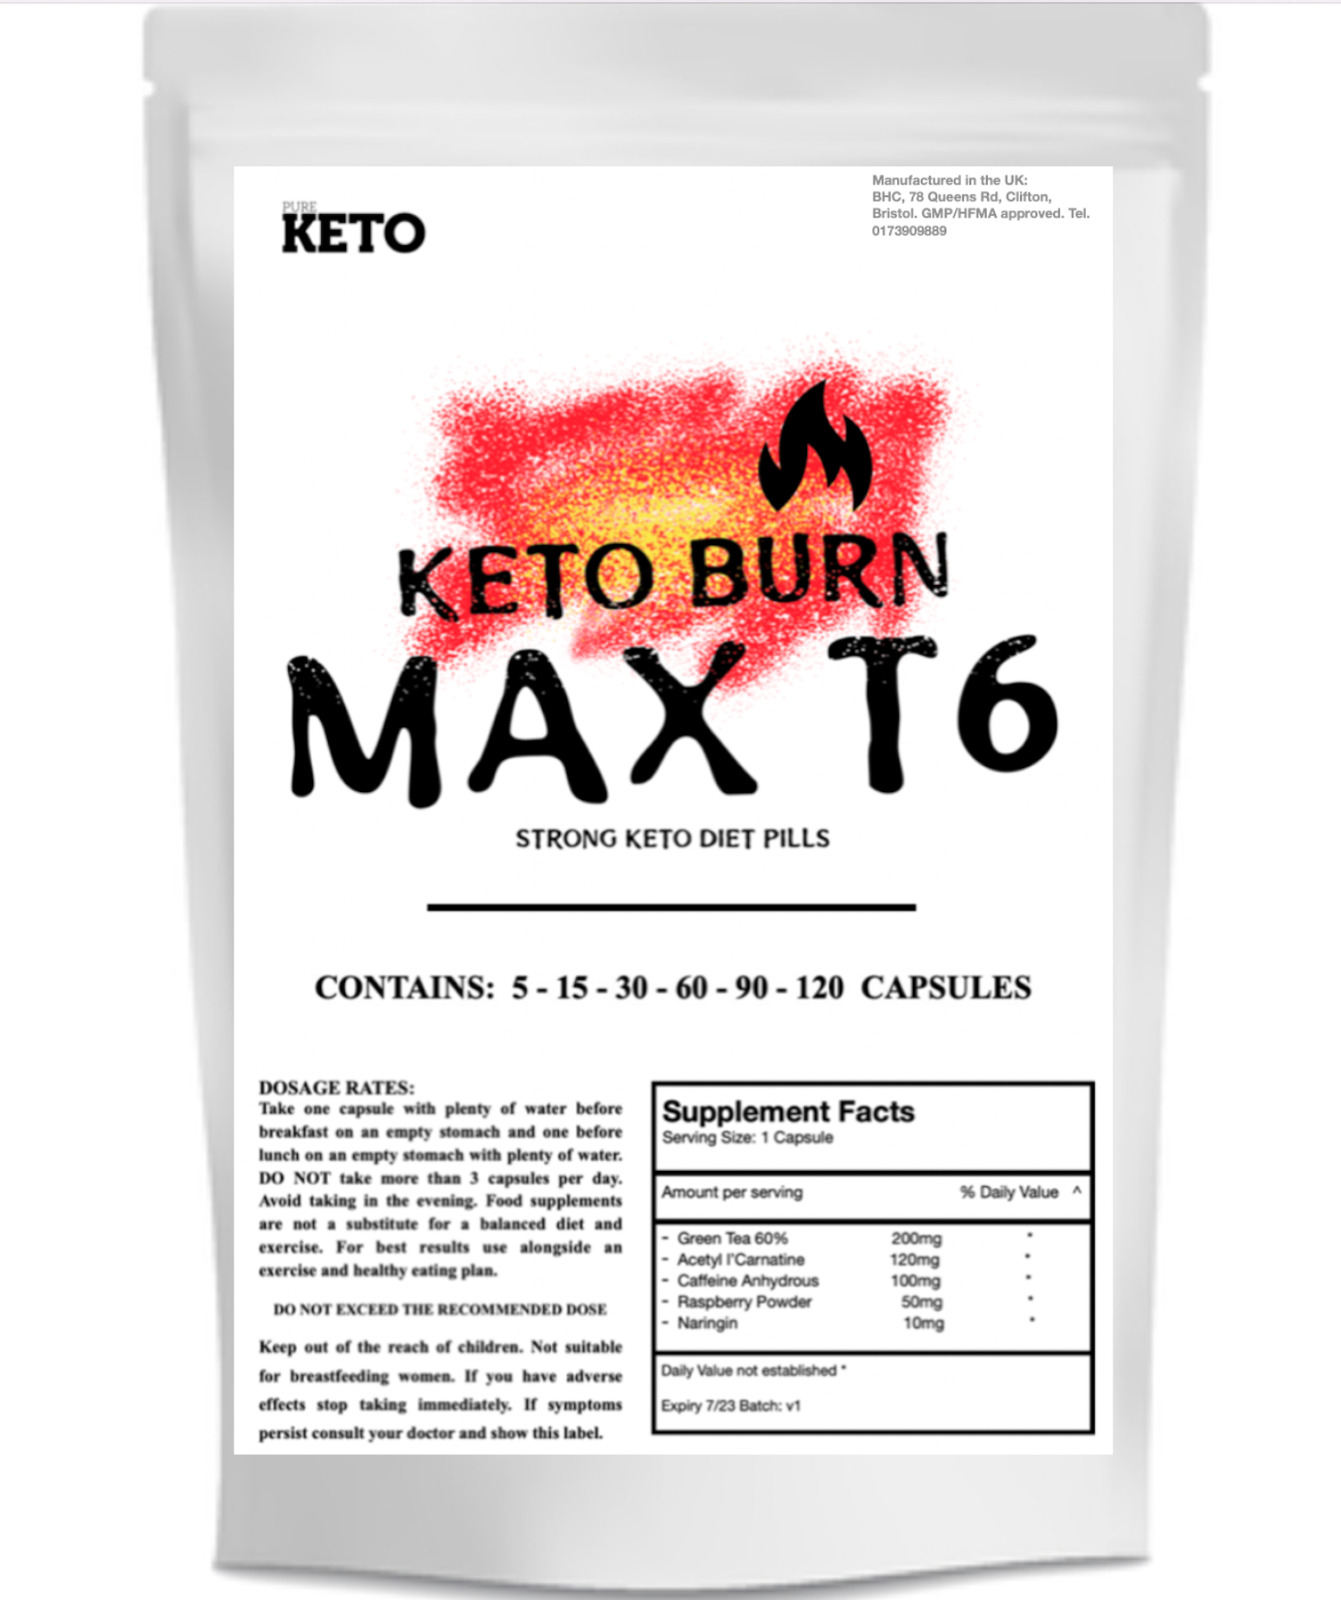 KETO BURN MAX T6 - Strong Keto Diet Pills - Fat Burners - Weight Loss Capsules